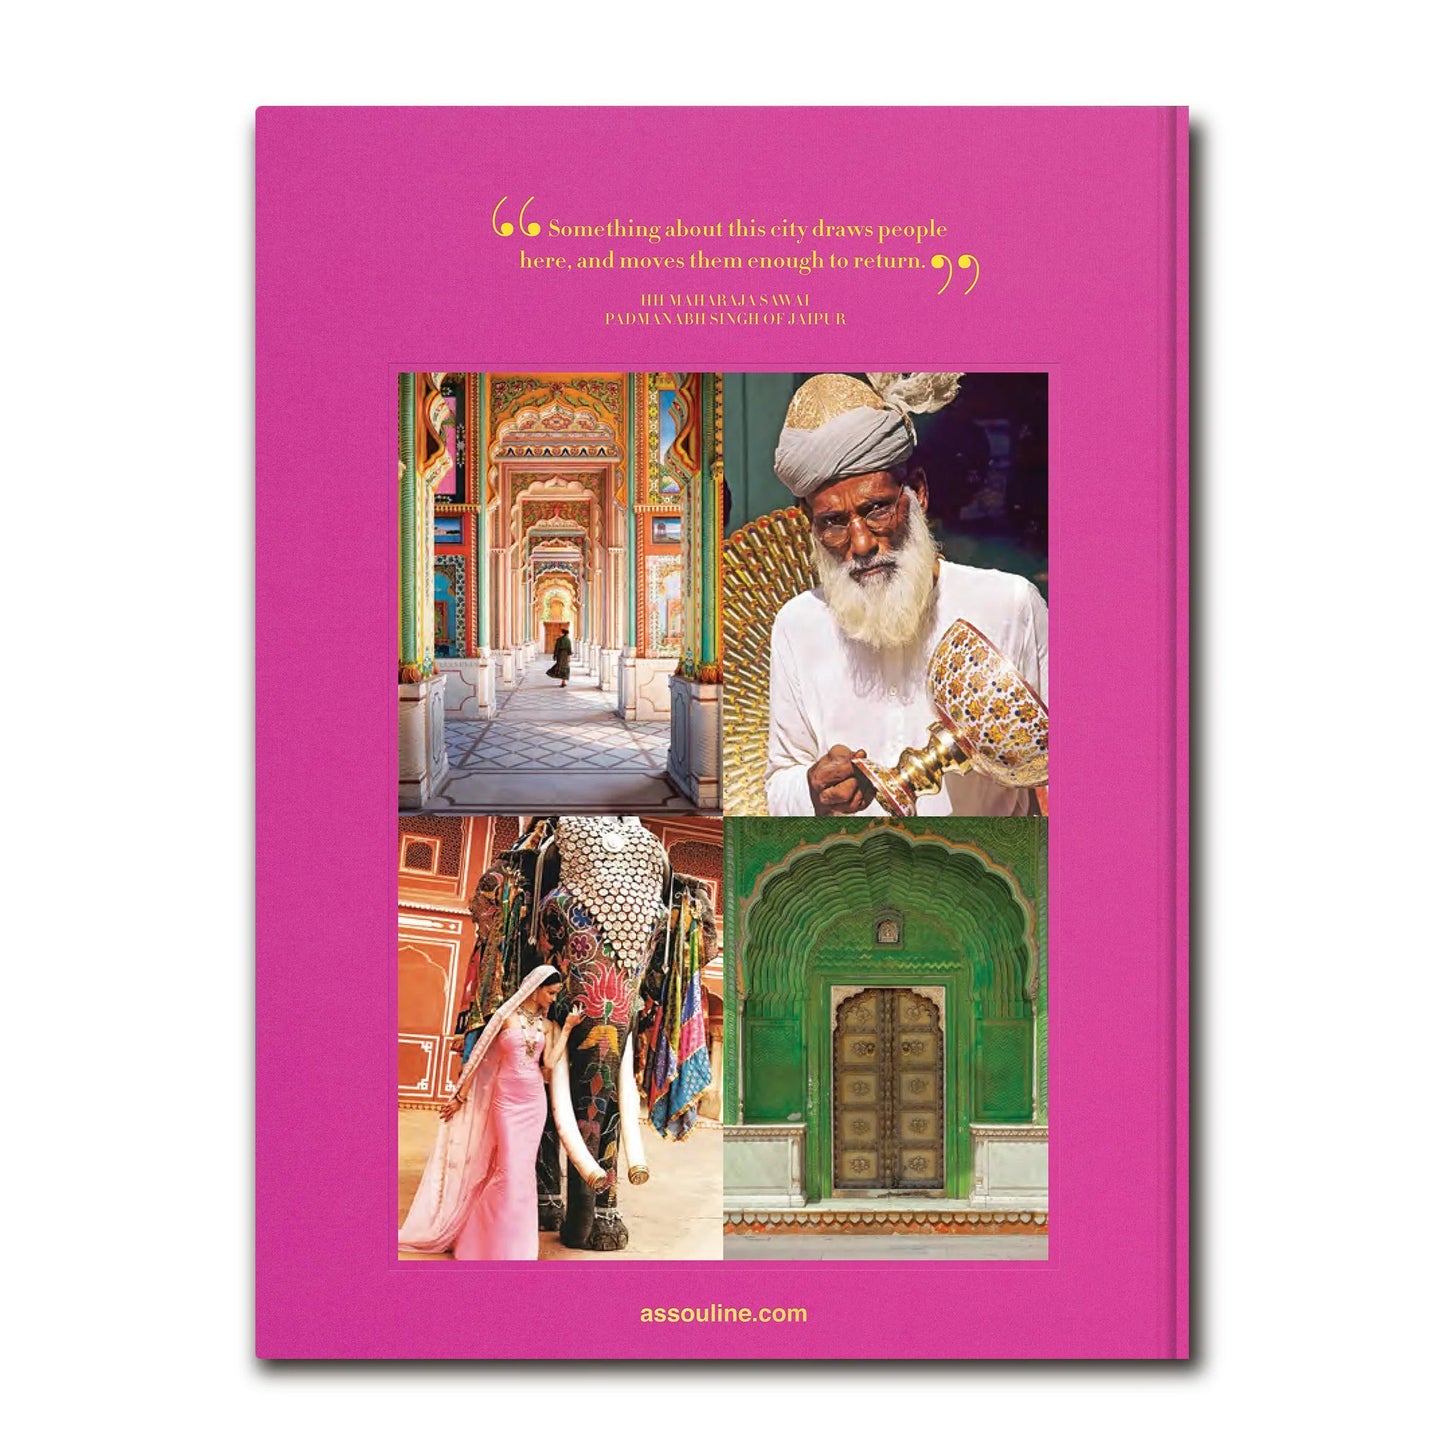 Book Jaipur Splendor | Assouline